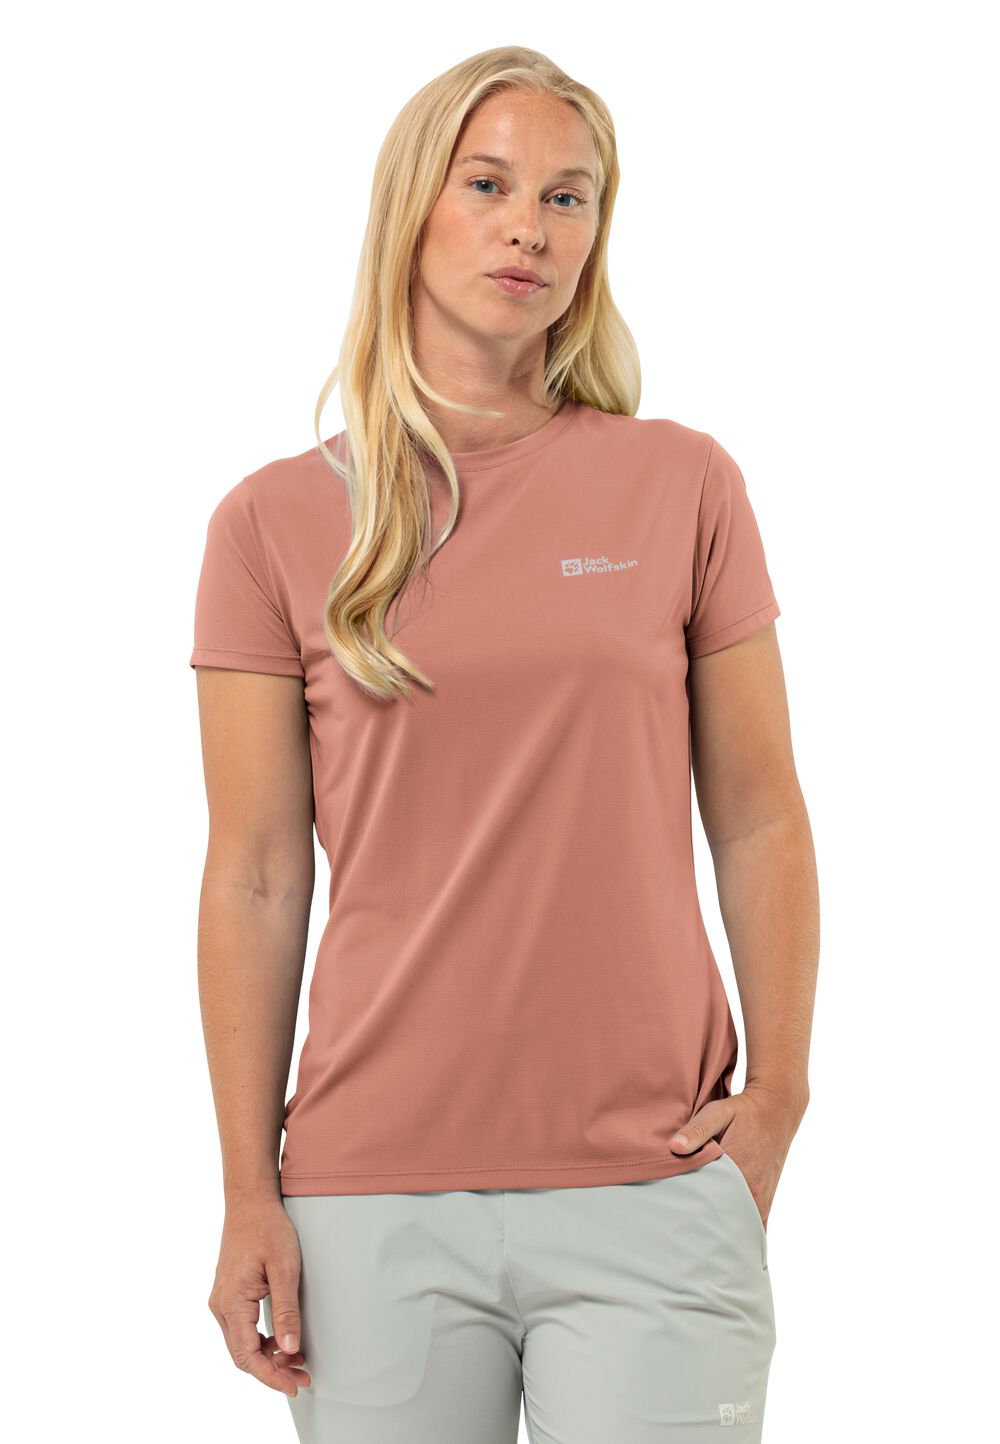 Jack Wolfskin Prelight Trail T-Shirt Women Functioneel shirt Dames L bruin astro dust